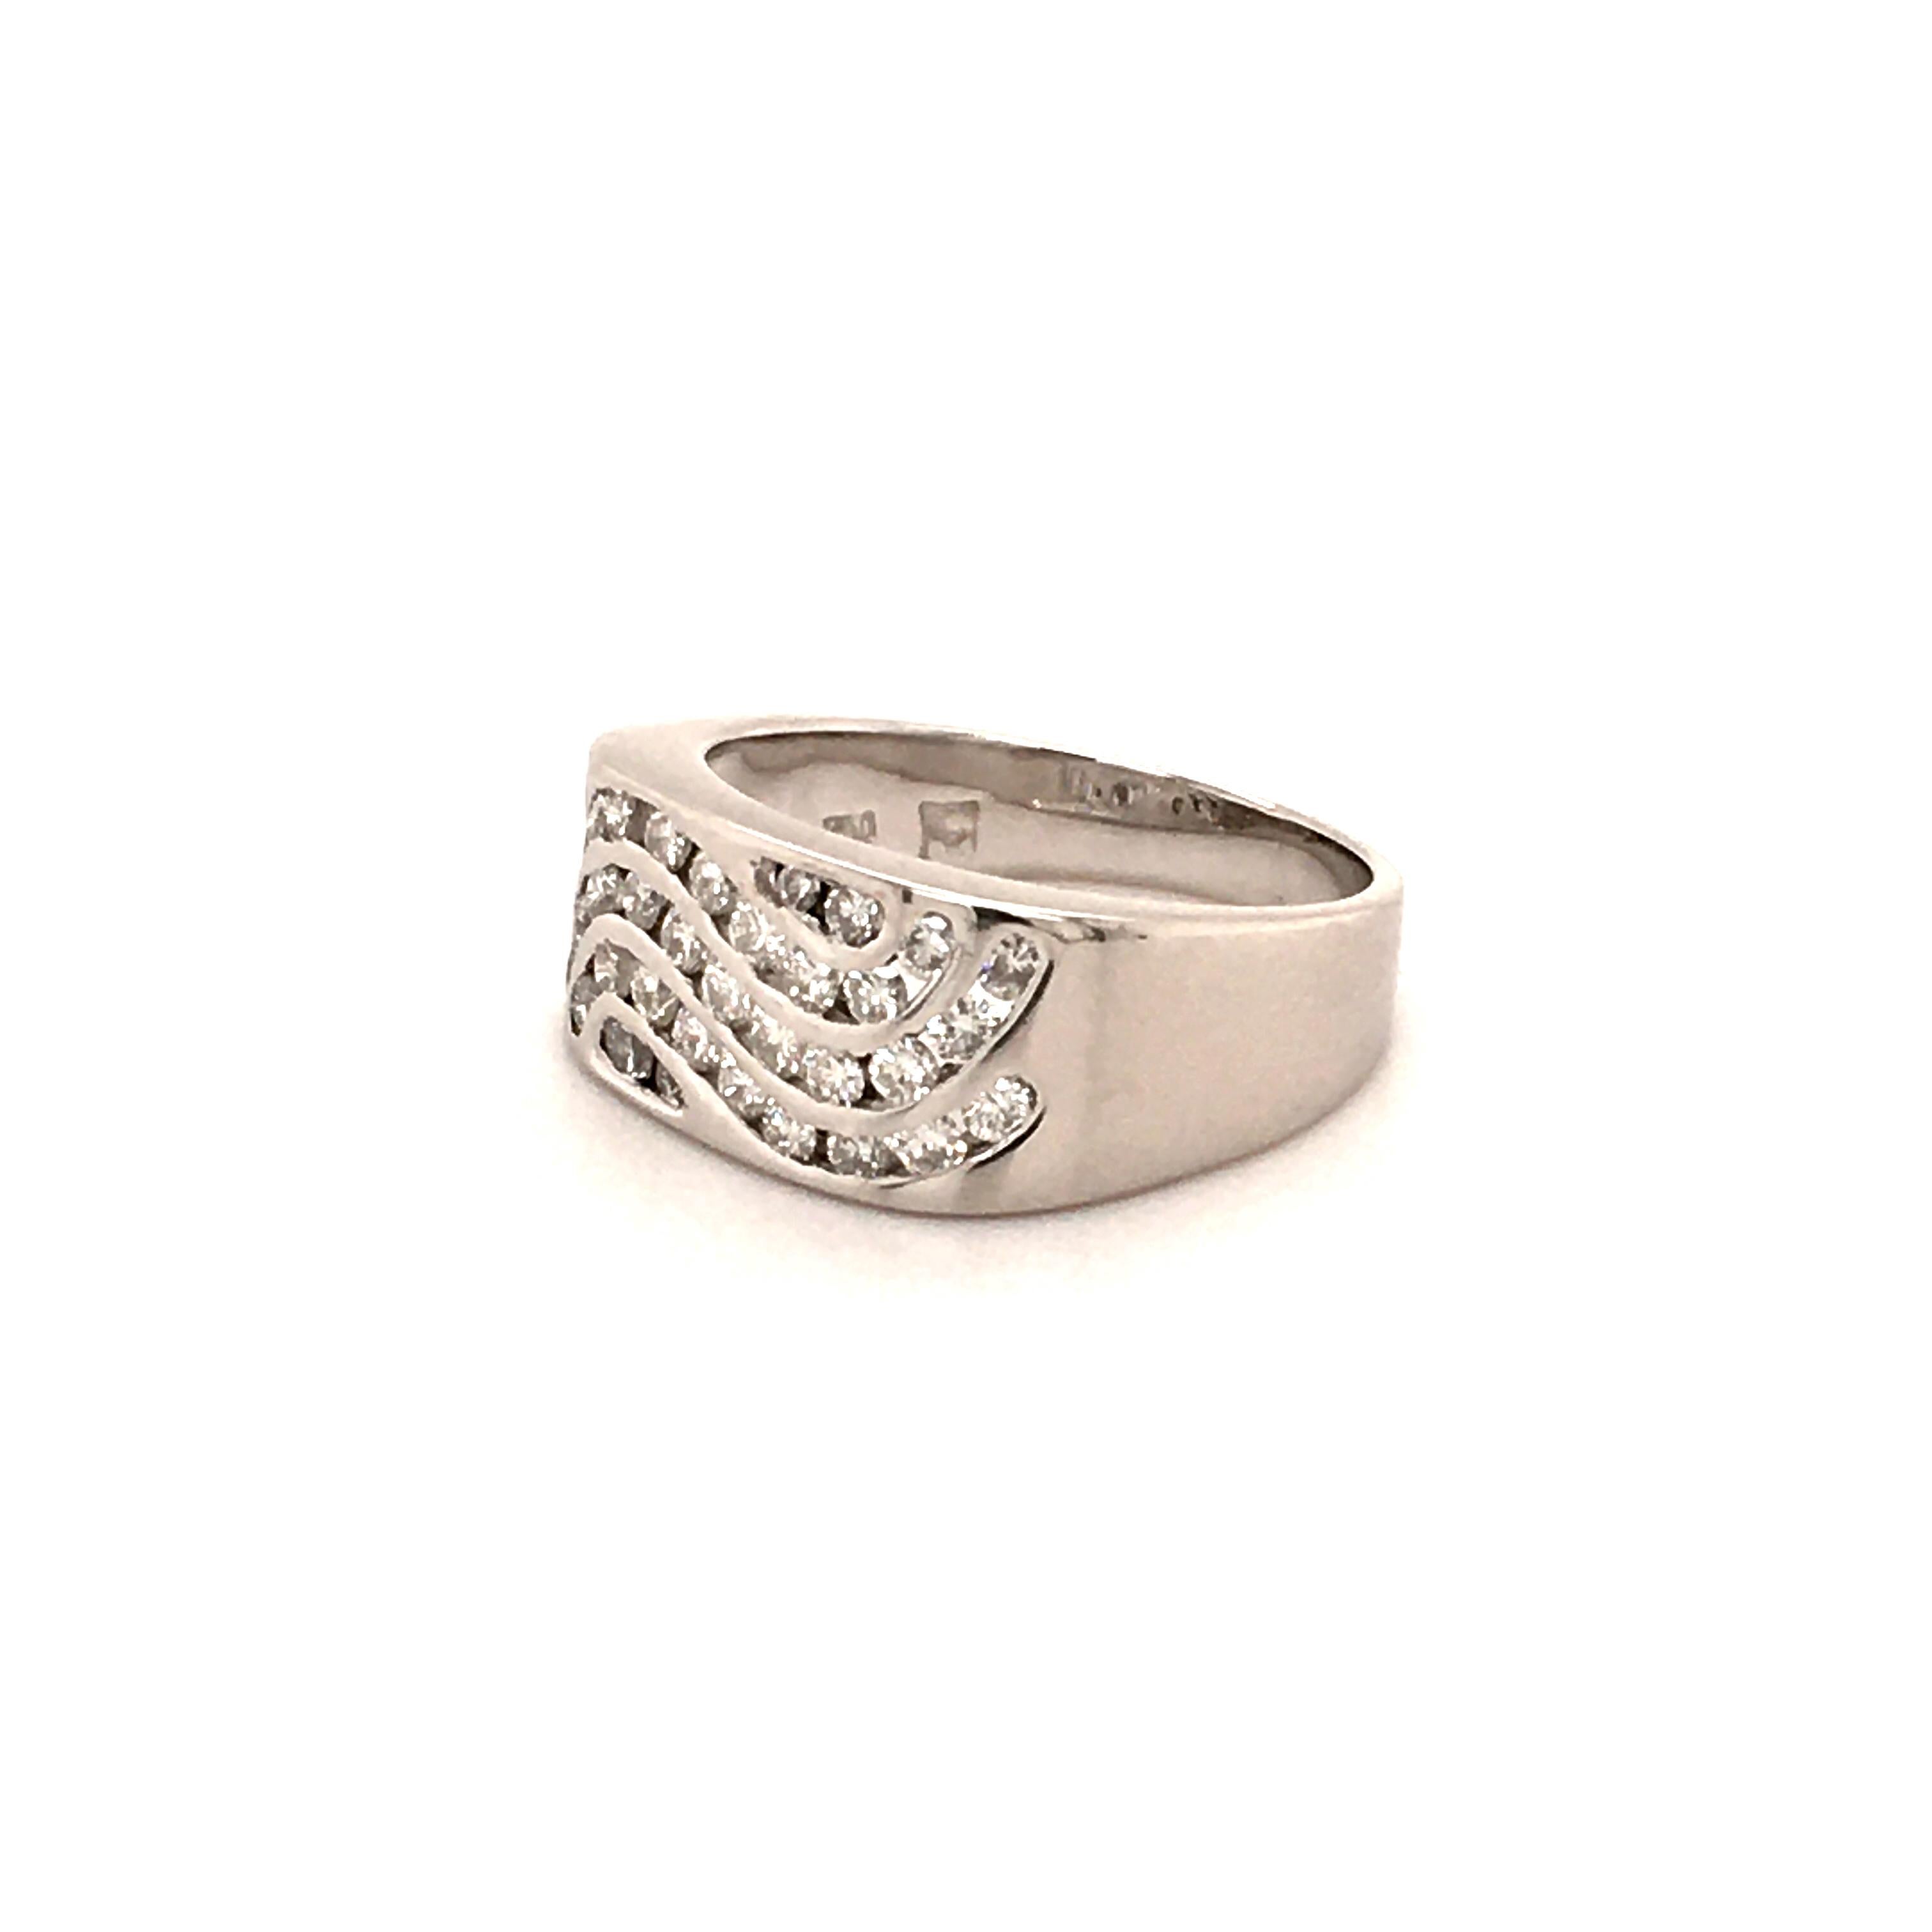 Brilliant Cut Modern Diamond Ring in 18 Karat White Gold